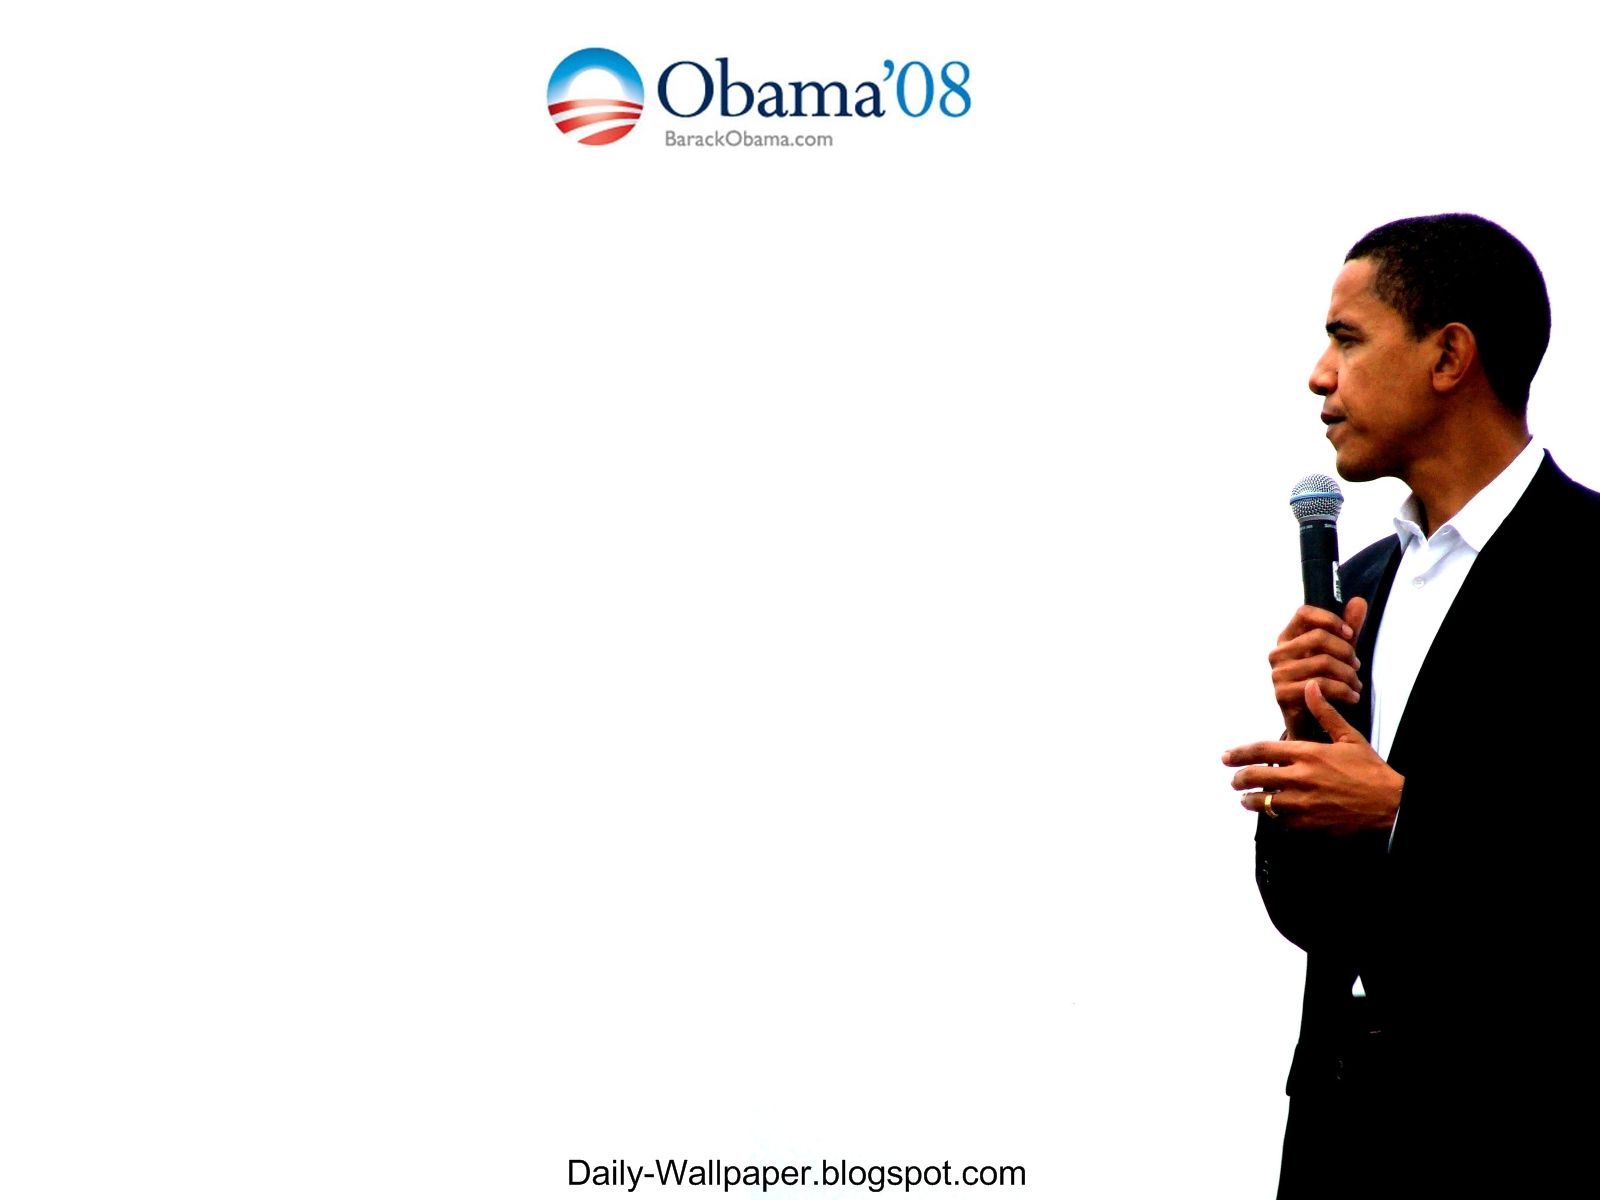 Barack Obama - Barack Obama Wallpaper 729185 - Fanpop